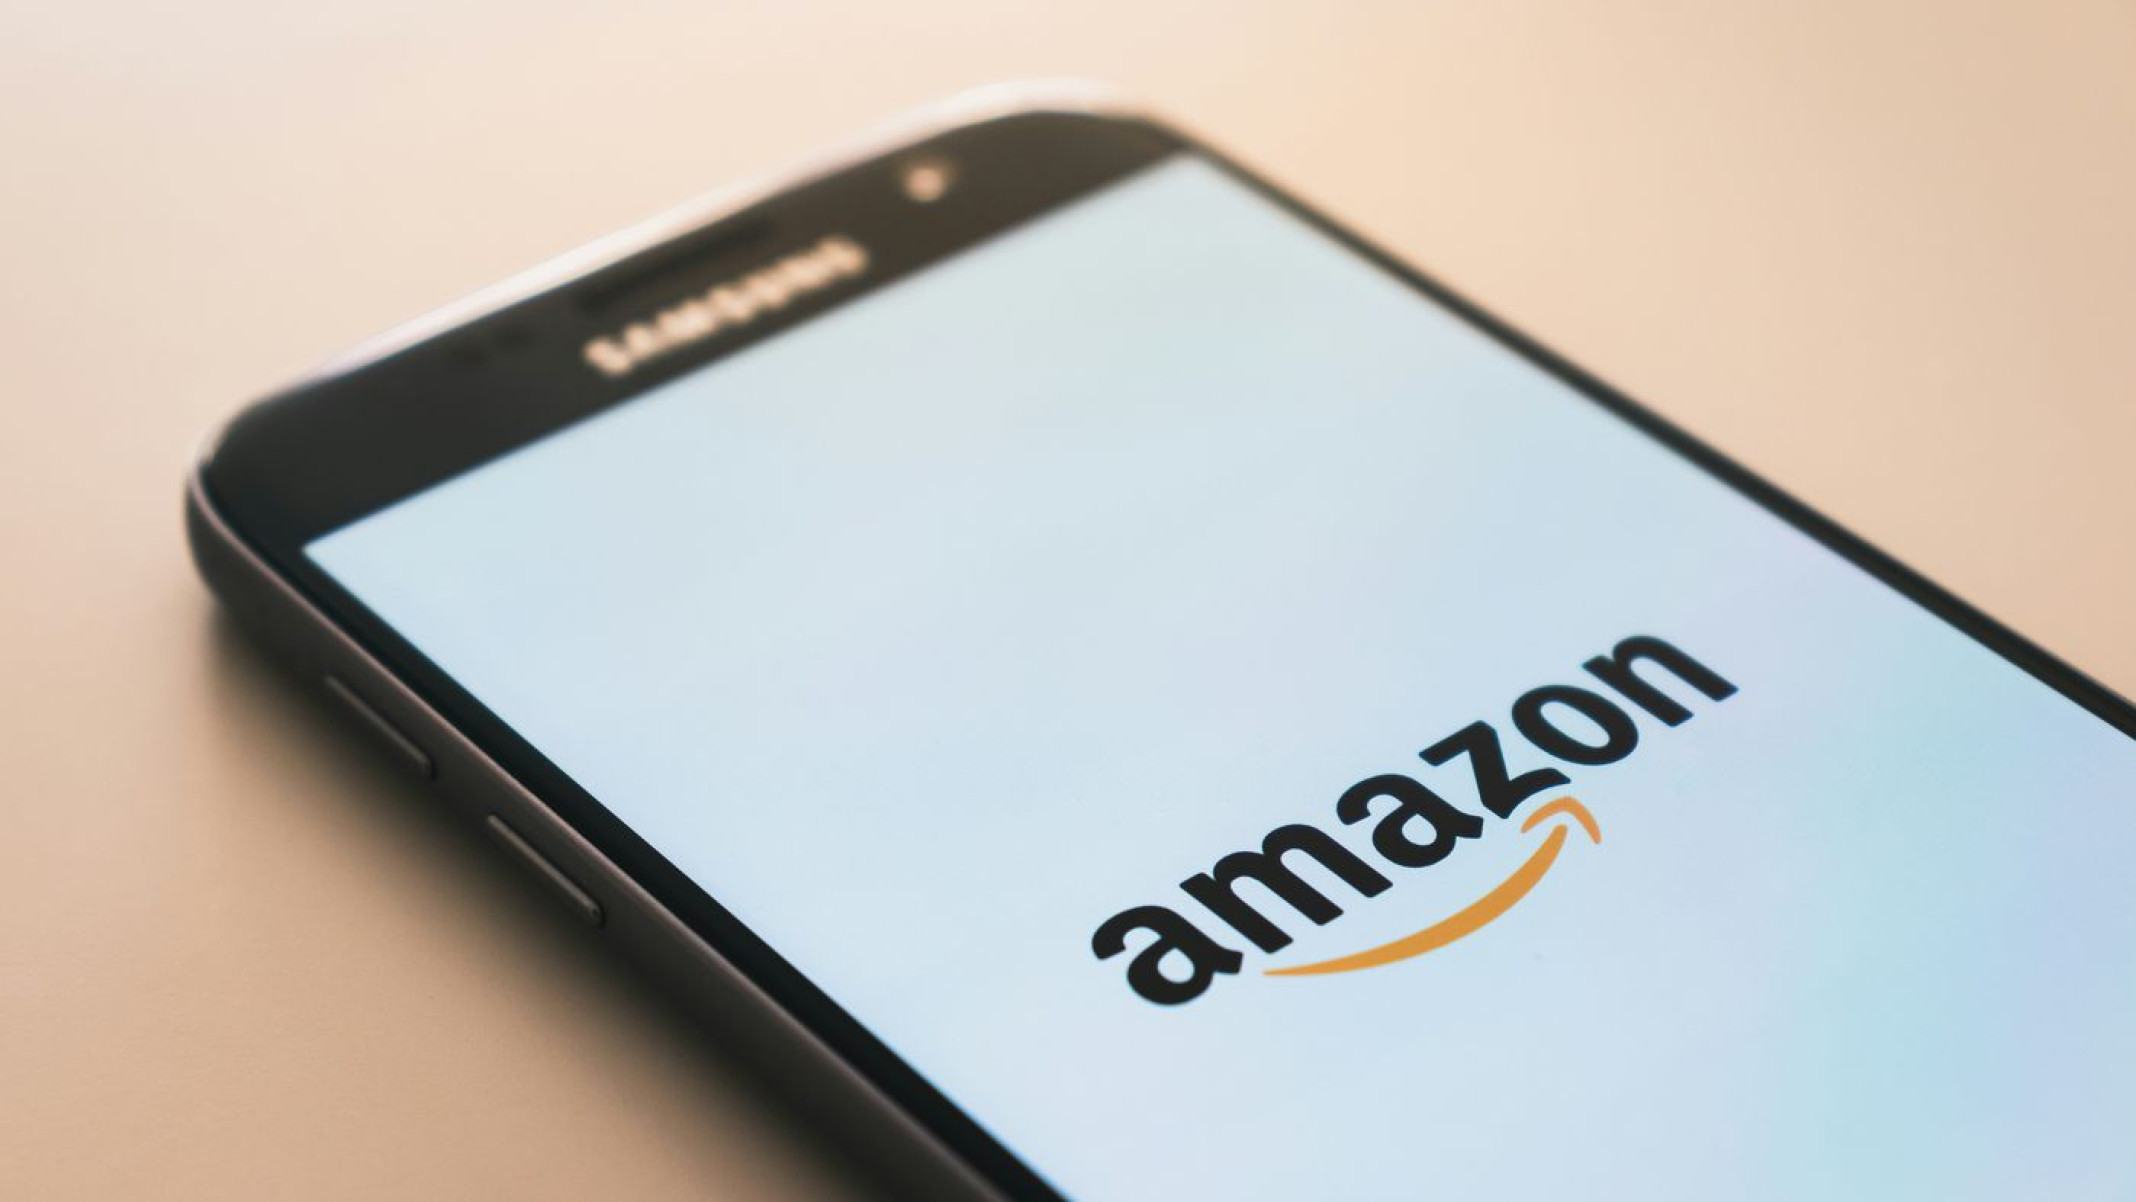 Amazon derruba na Justiça medida da Anatel contra celulares piratas